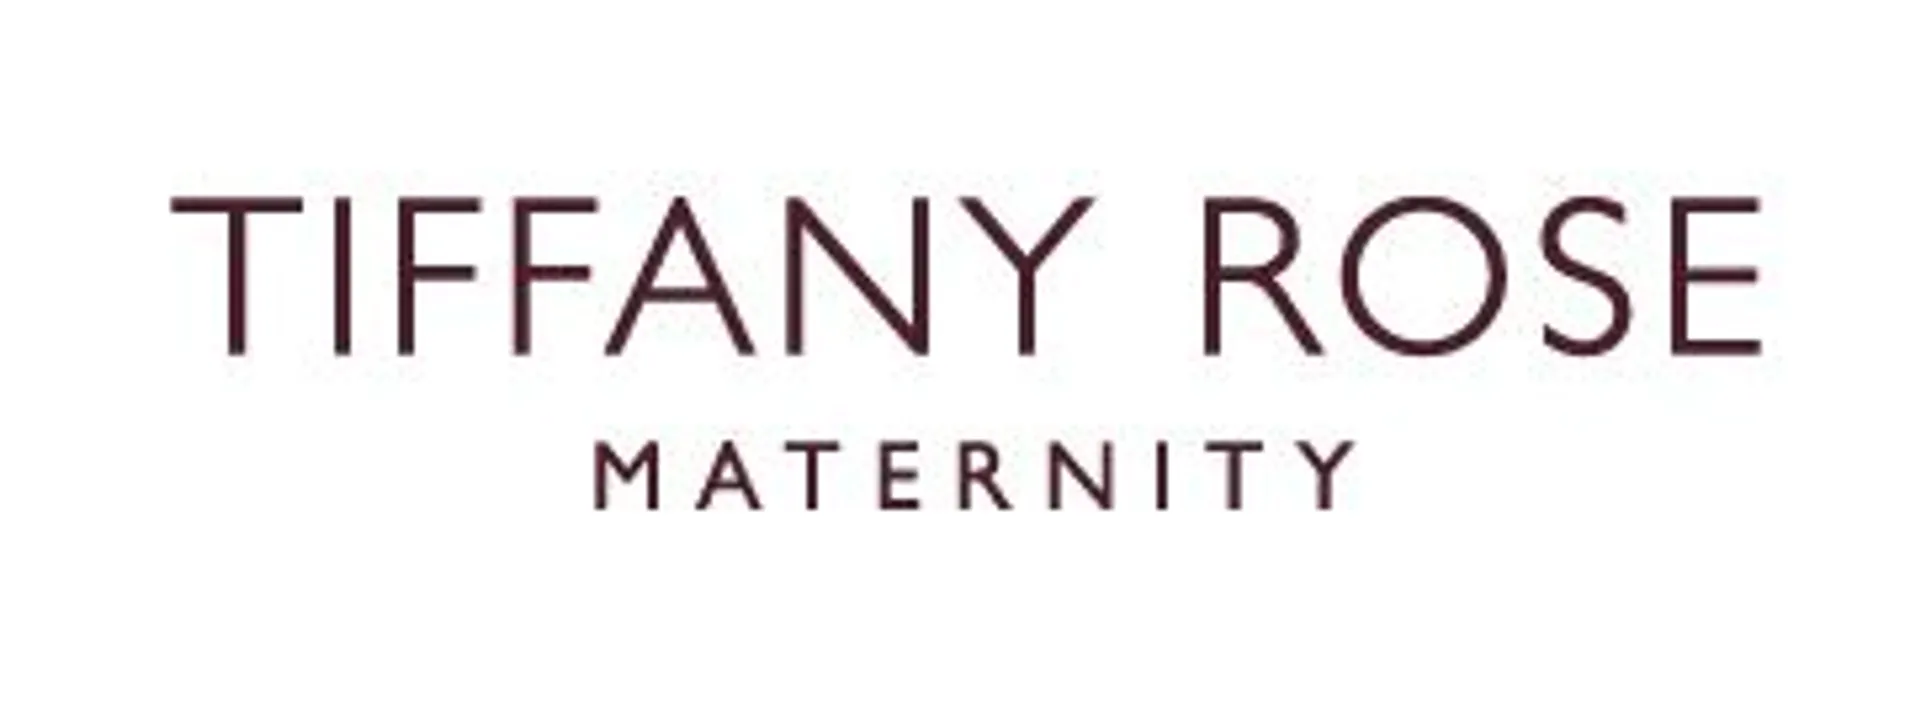 TIFFANY ROSE logo